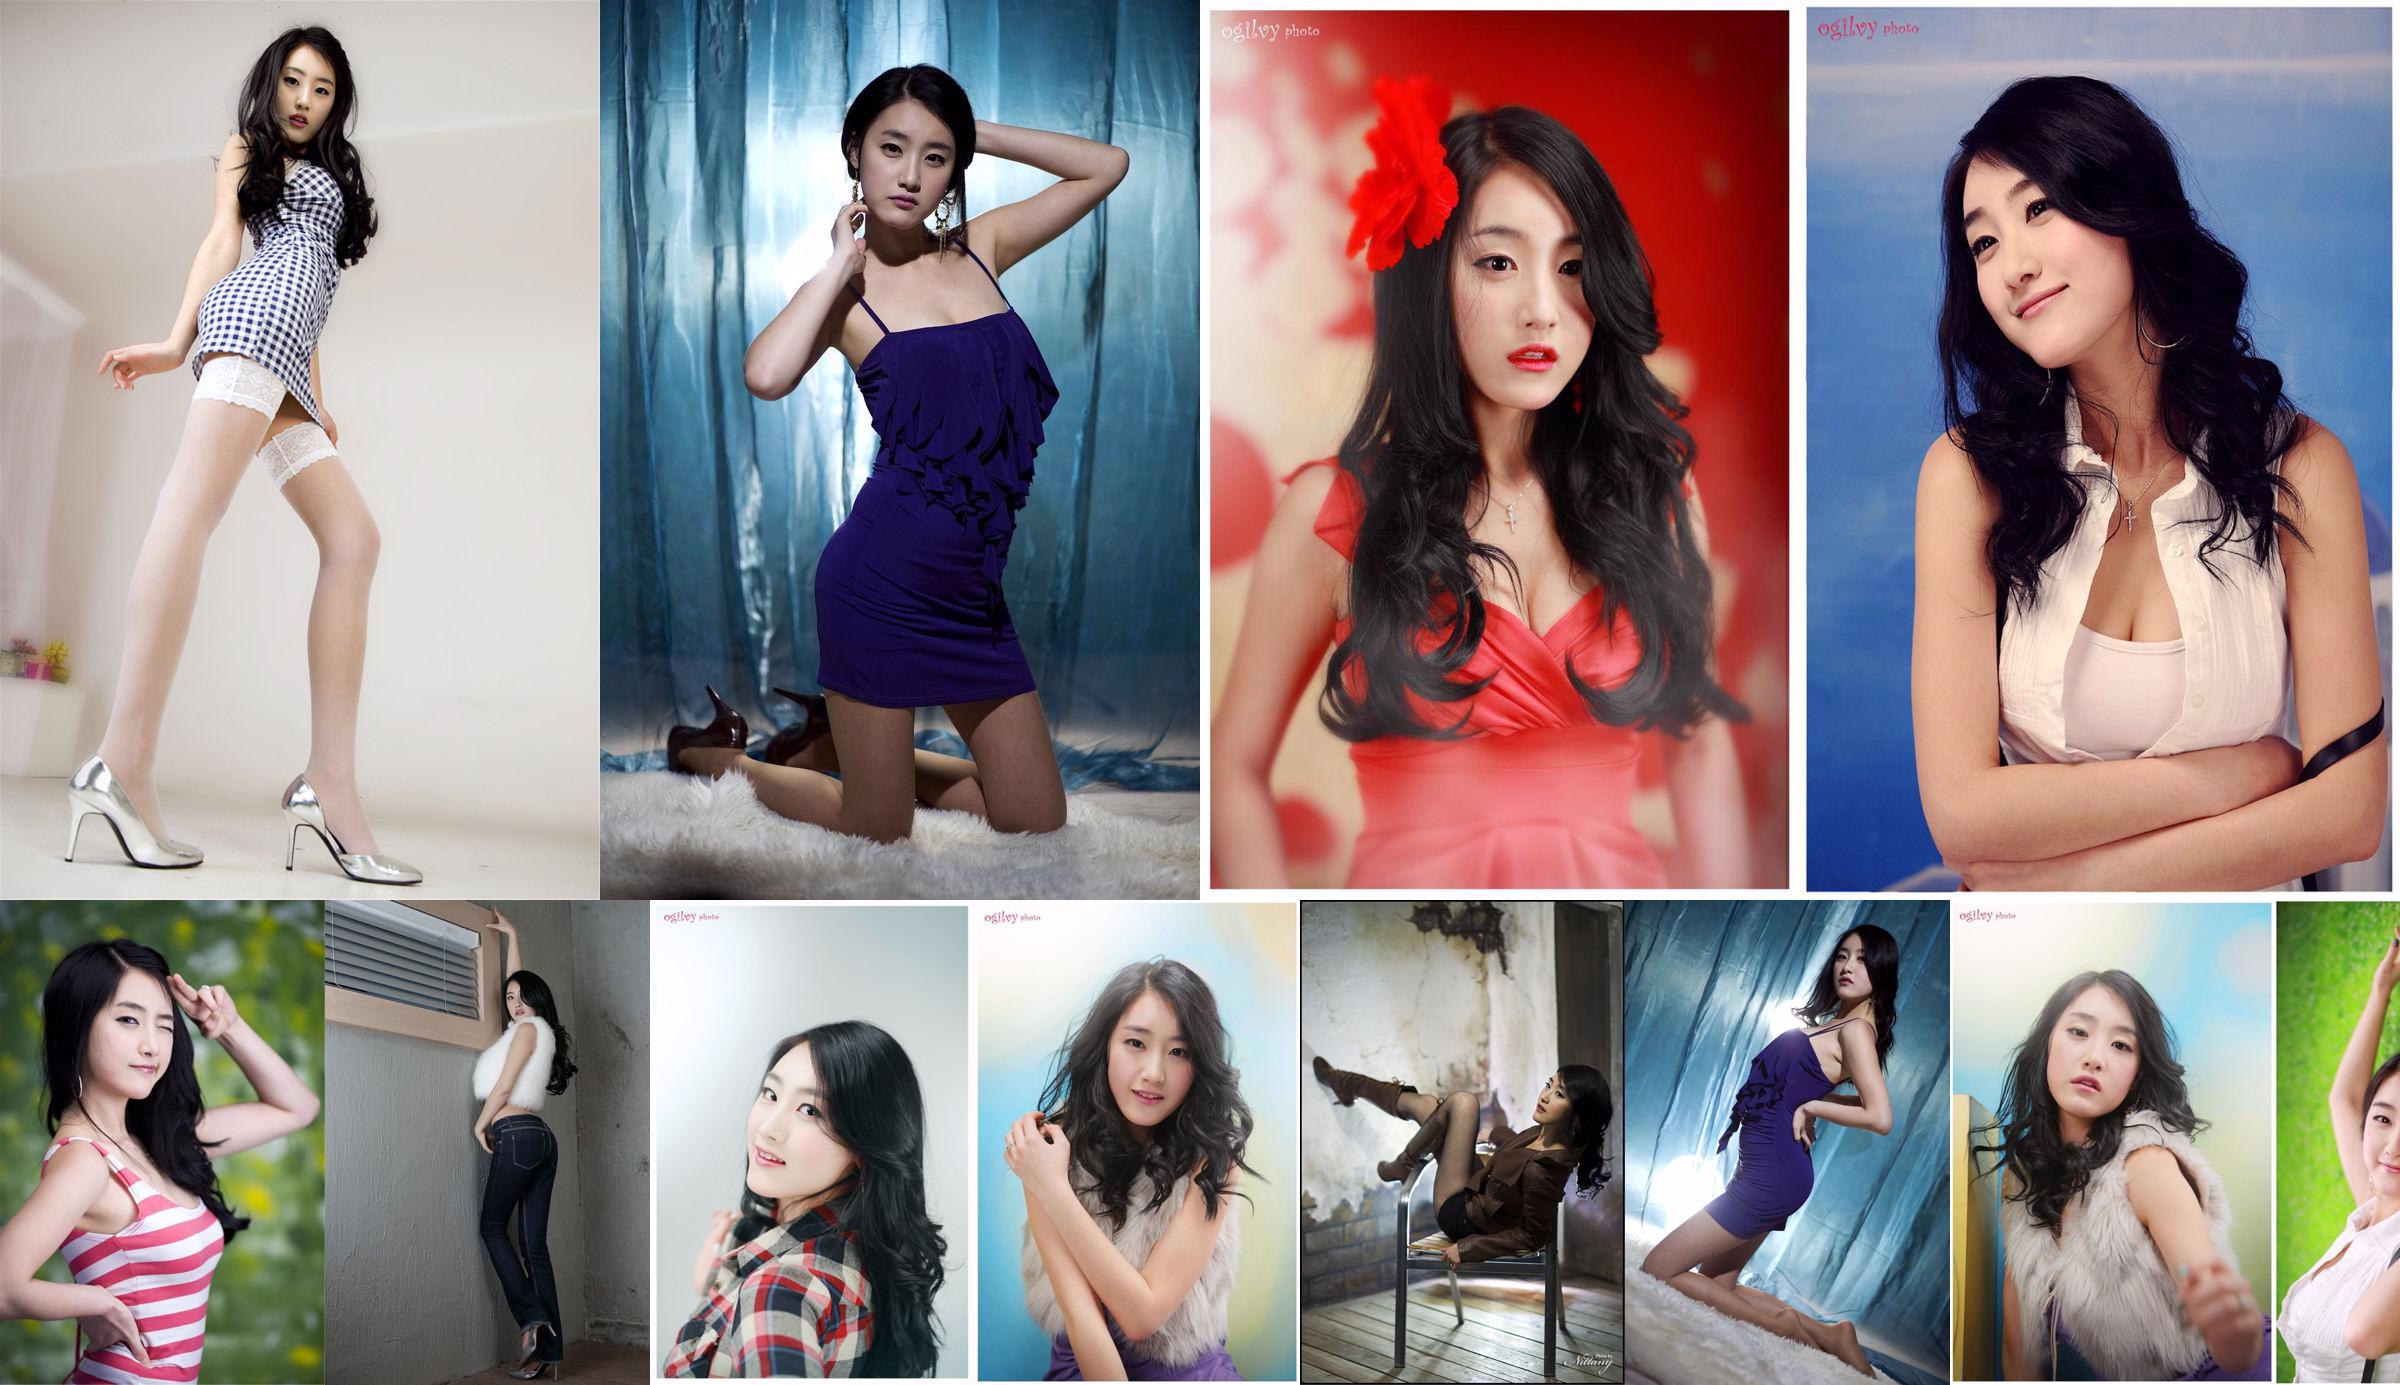 [Koreaans model] Choi Zhixiang Striped Photo Picture No.2a36fd Pagina 1